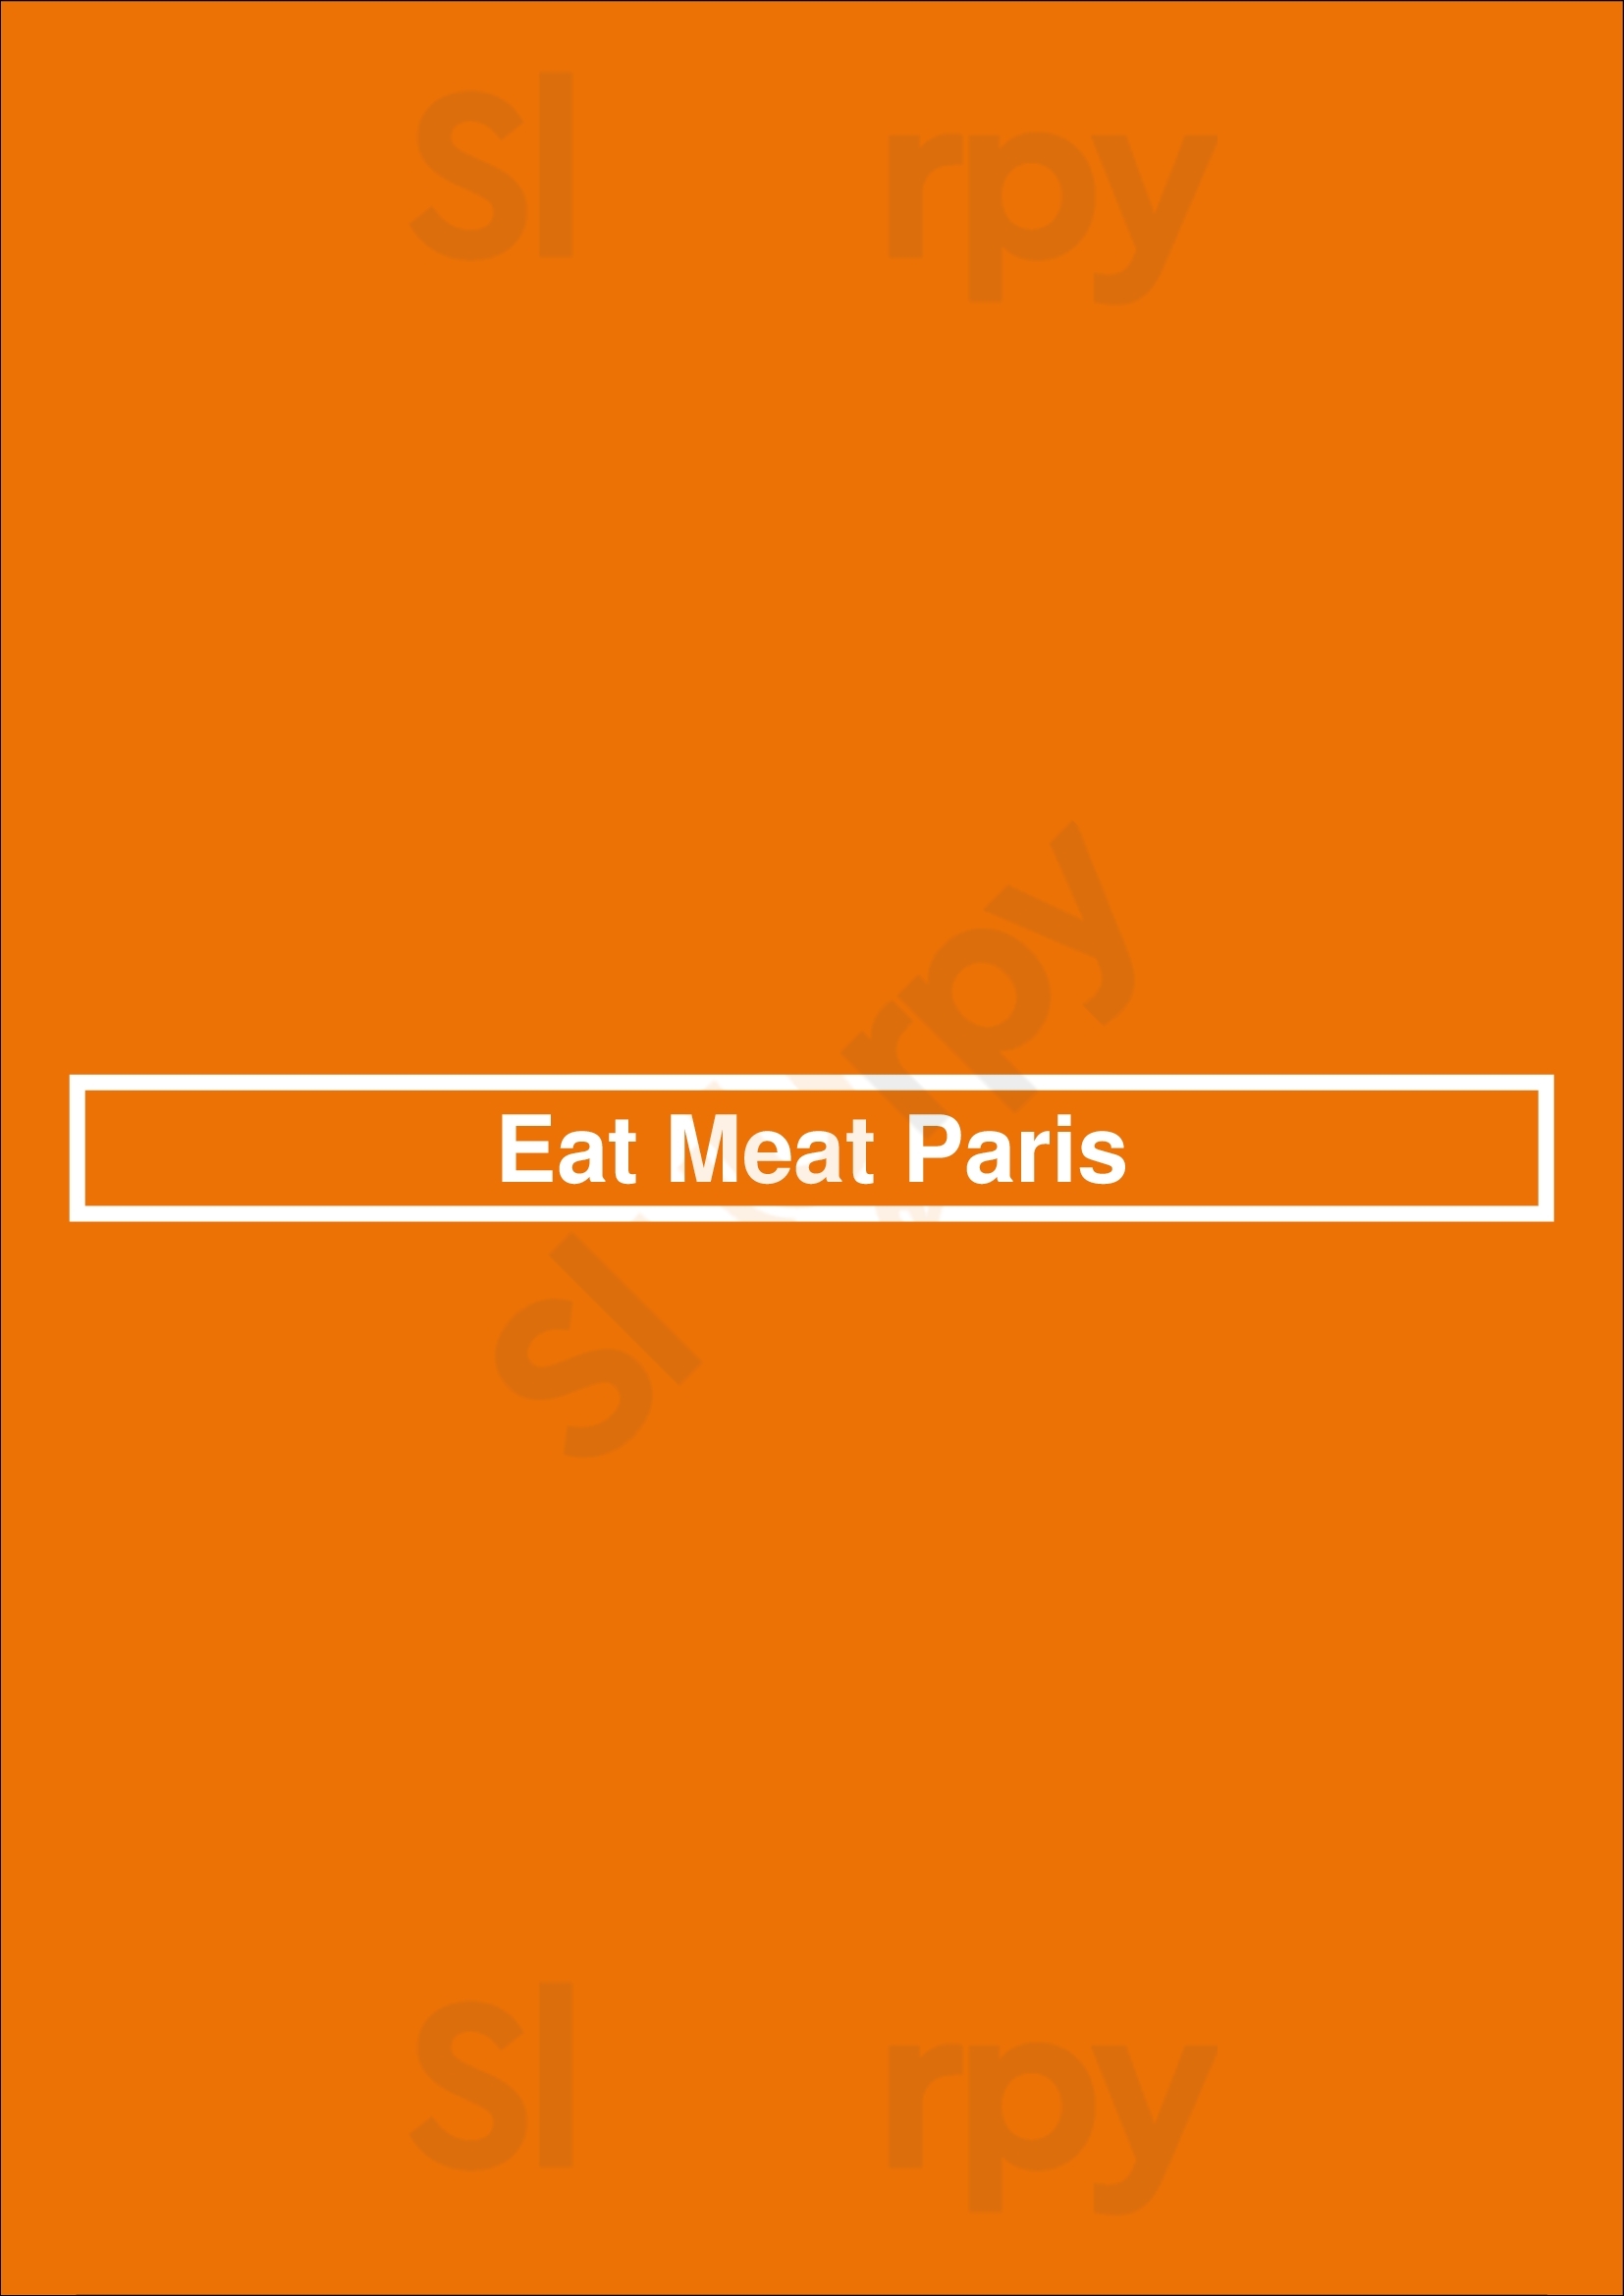 Eat Meat Paris Paris Menu - 1